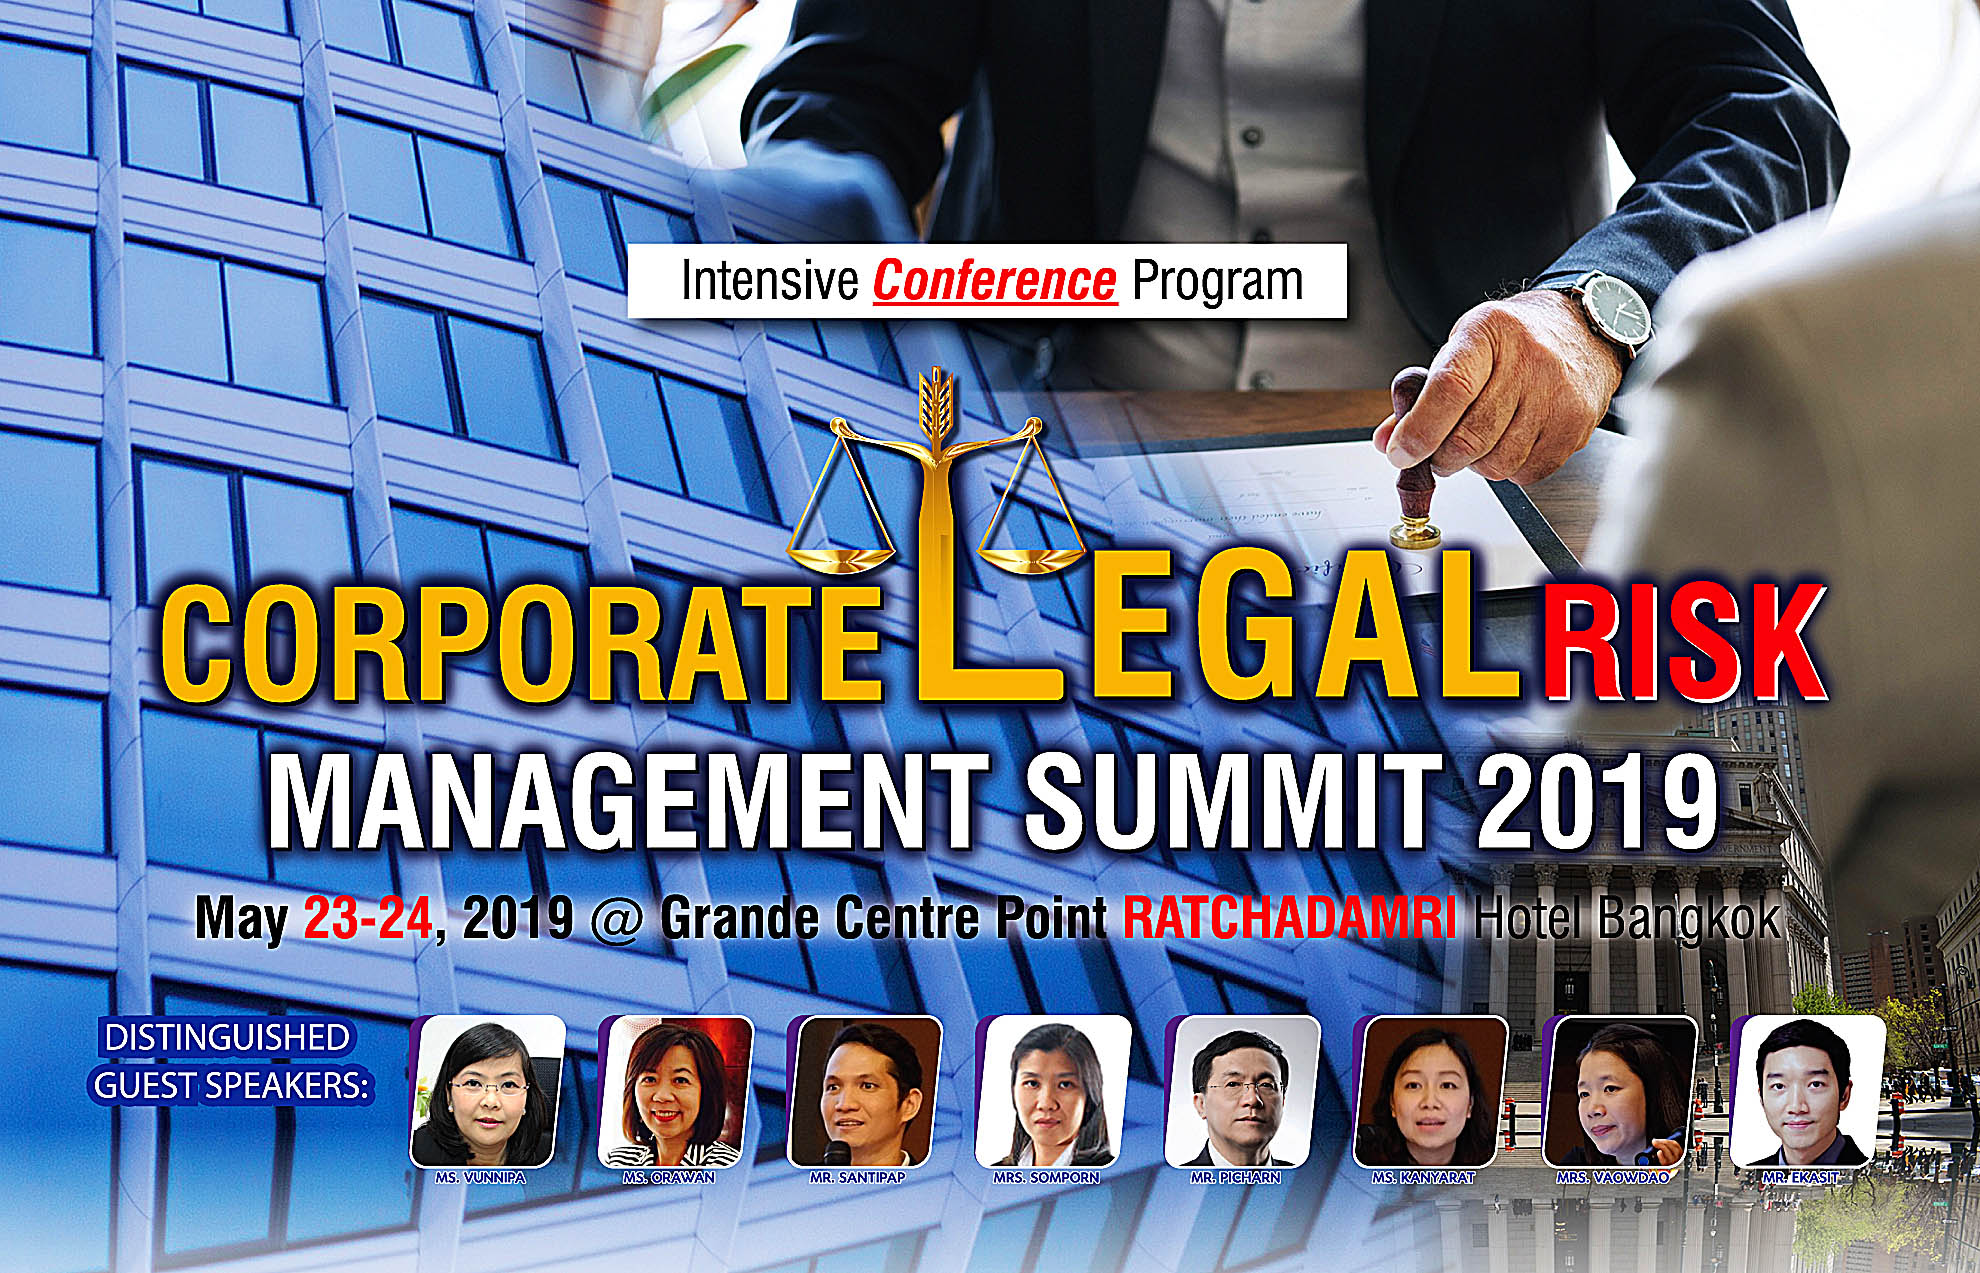 Corporate Legal Risk Management Summit 2019